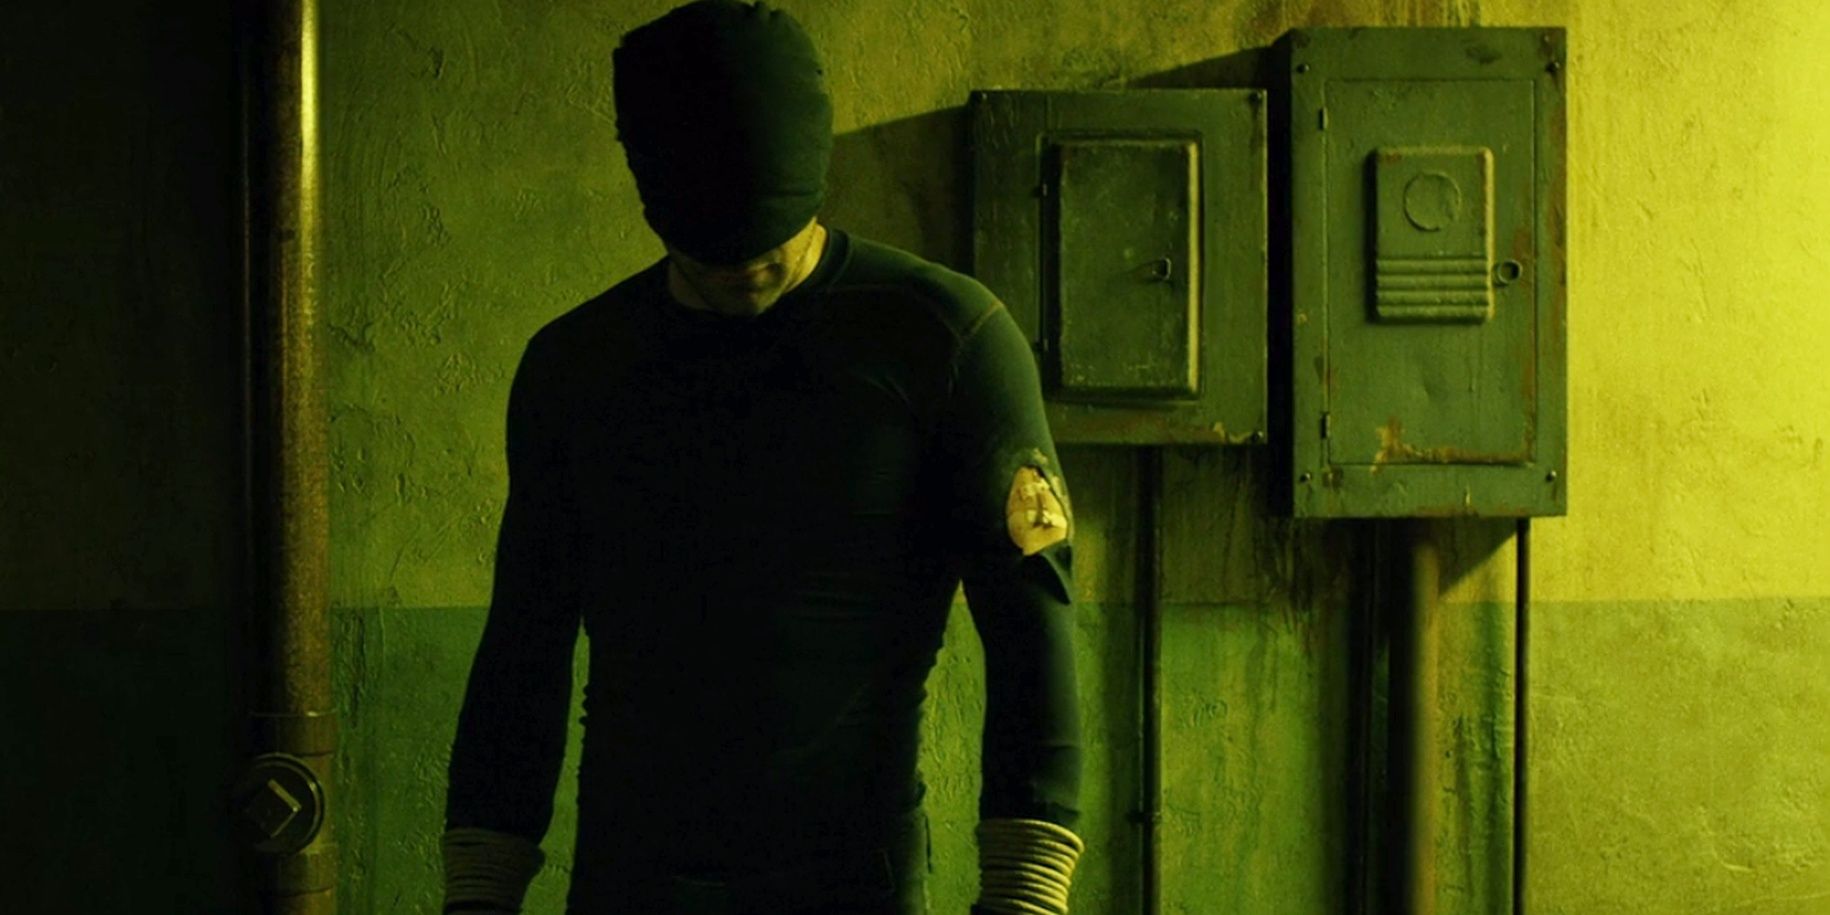 Matt Murdock hallway fight scene in Daredevil